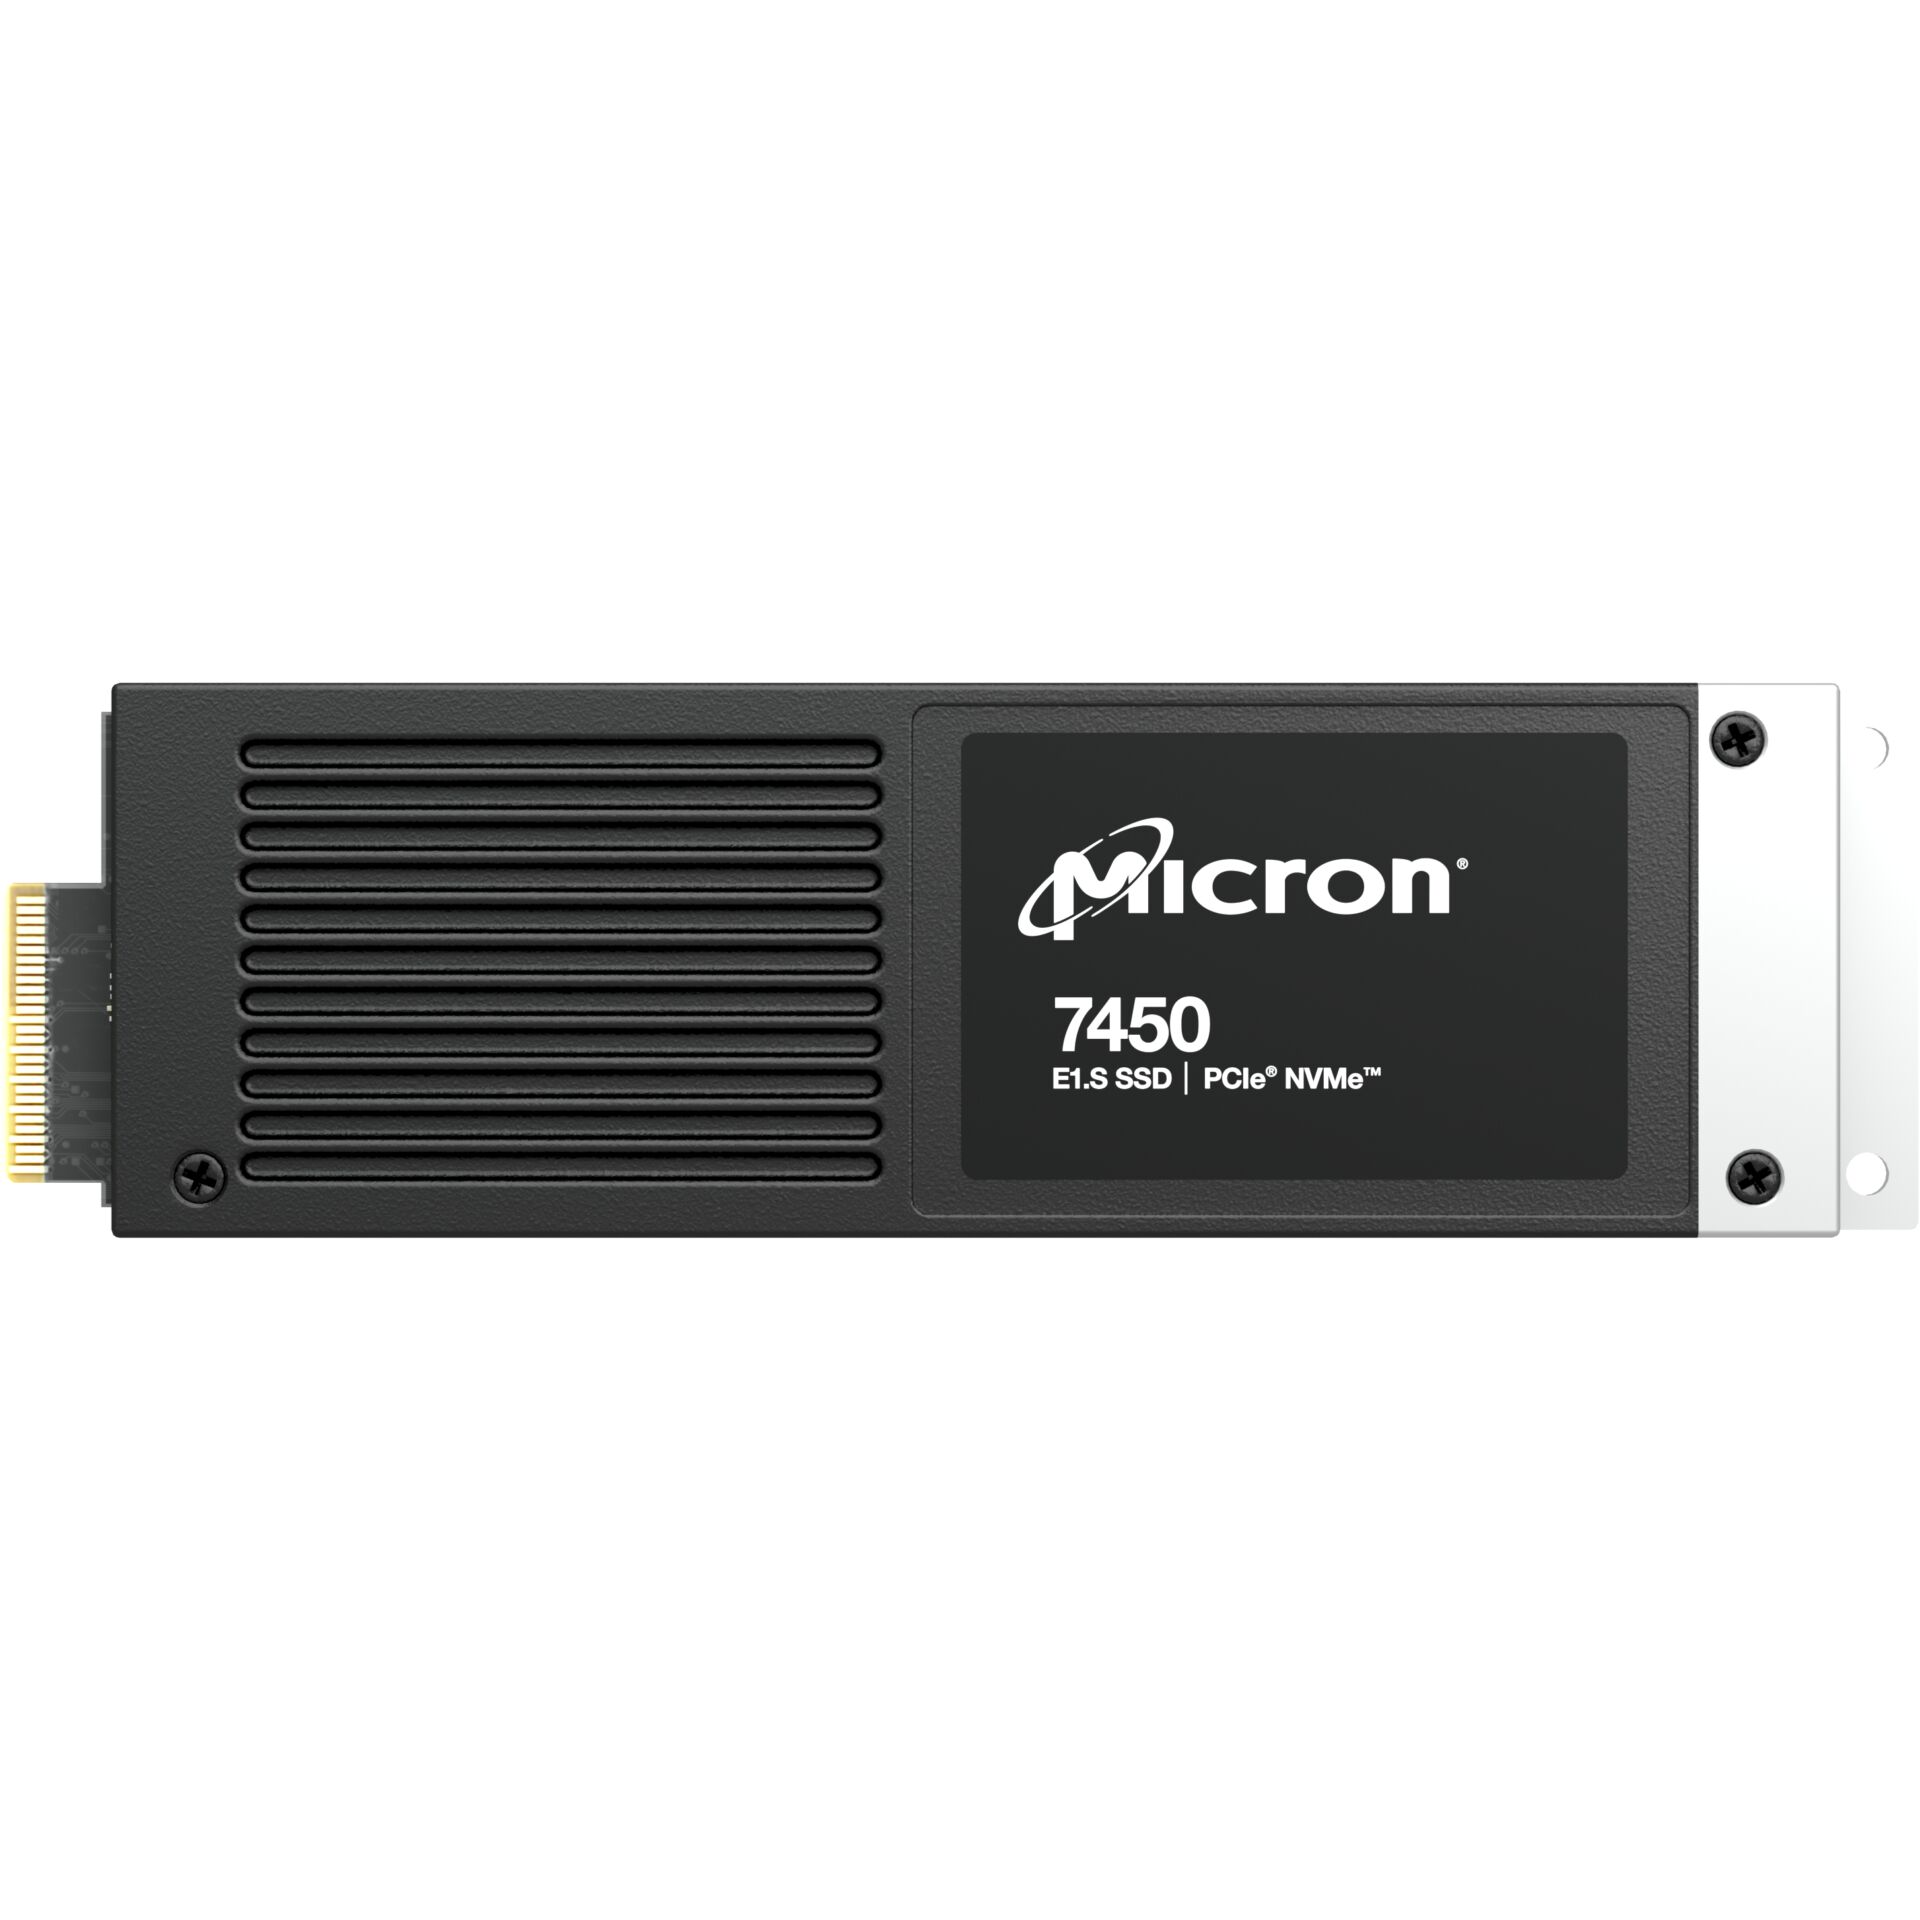 Micron 7450 PRO 1920GB NVMe E1.S (15mm) TCG-Opal